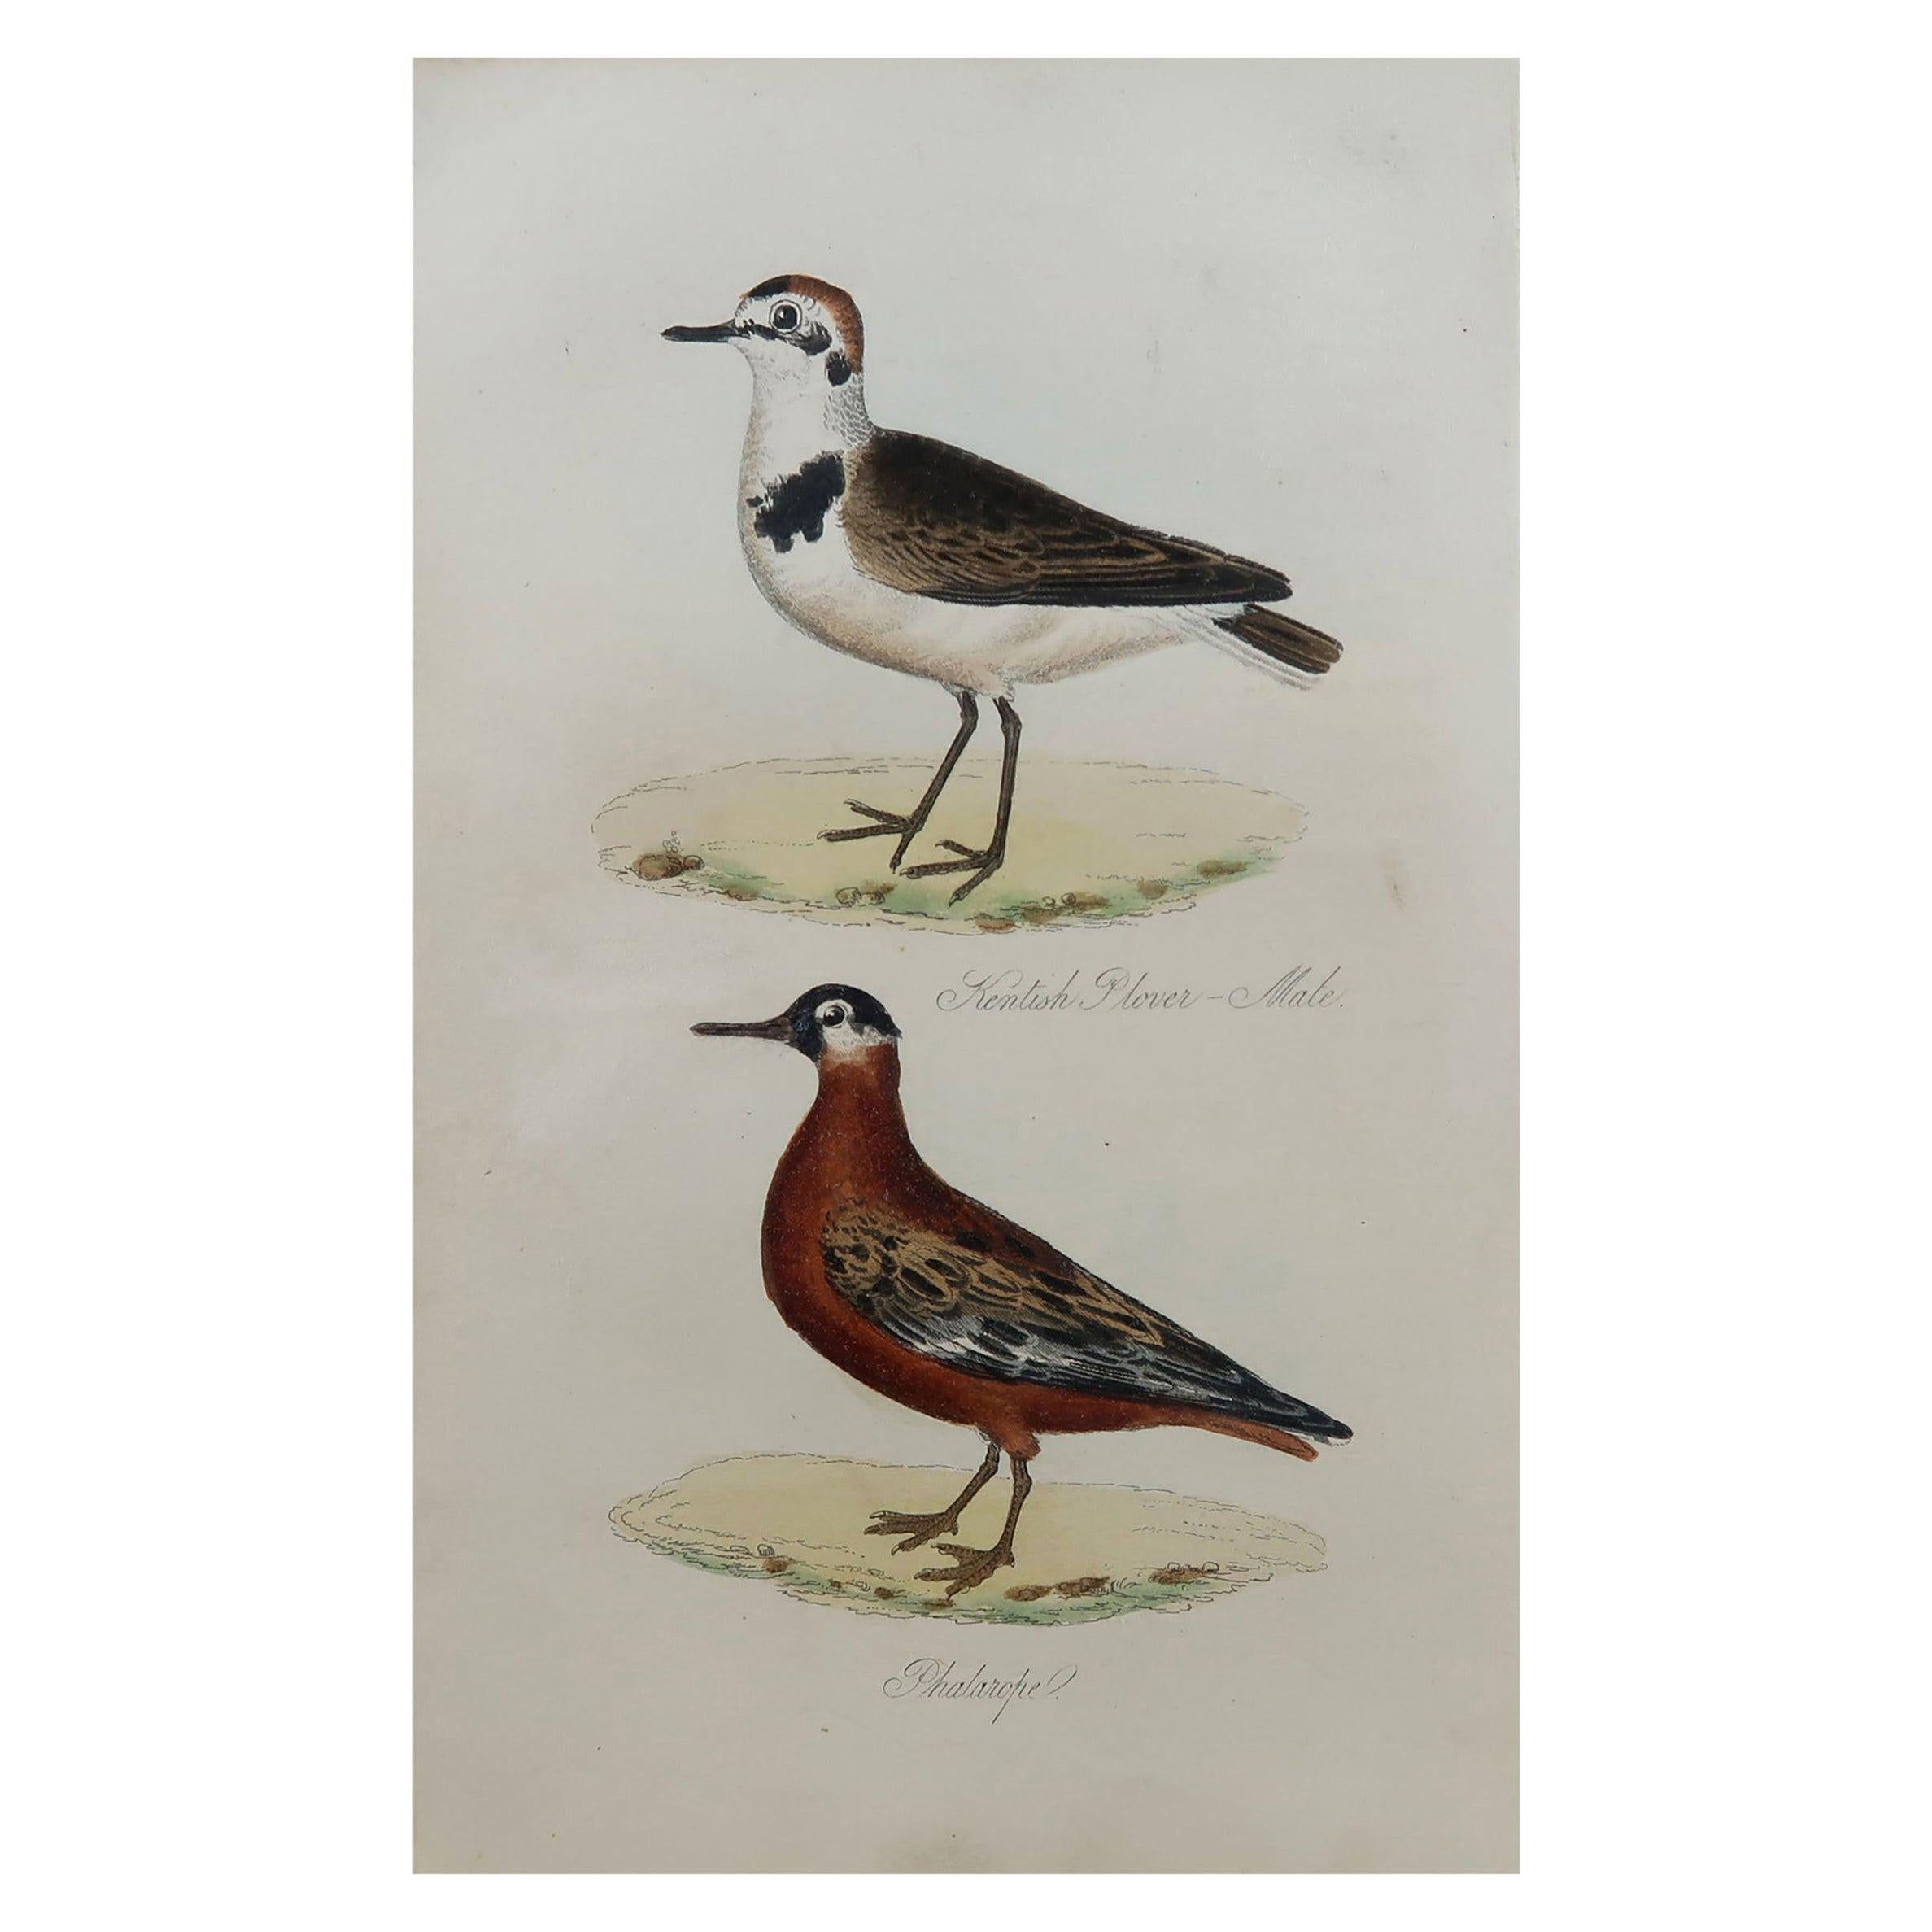 Original Antique Bird Print, Kentish Plover and Phalarope, circa 1850